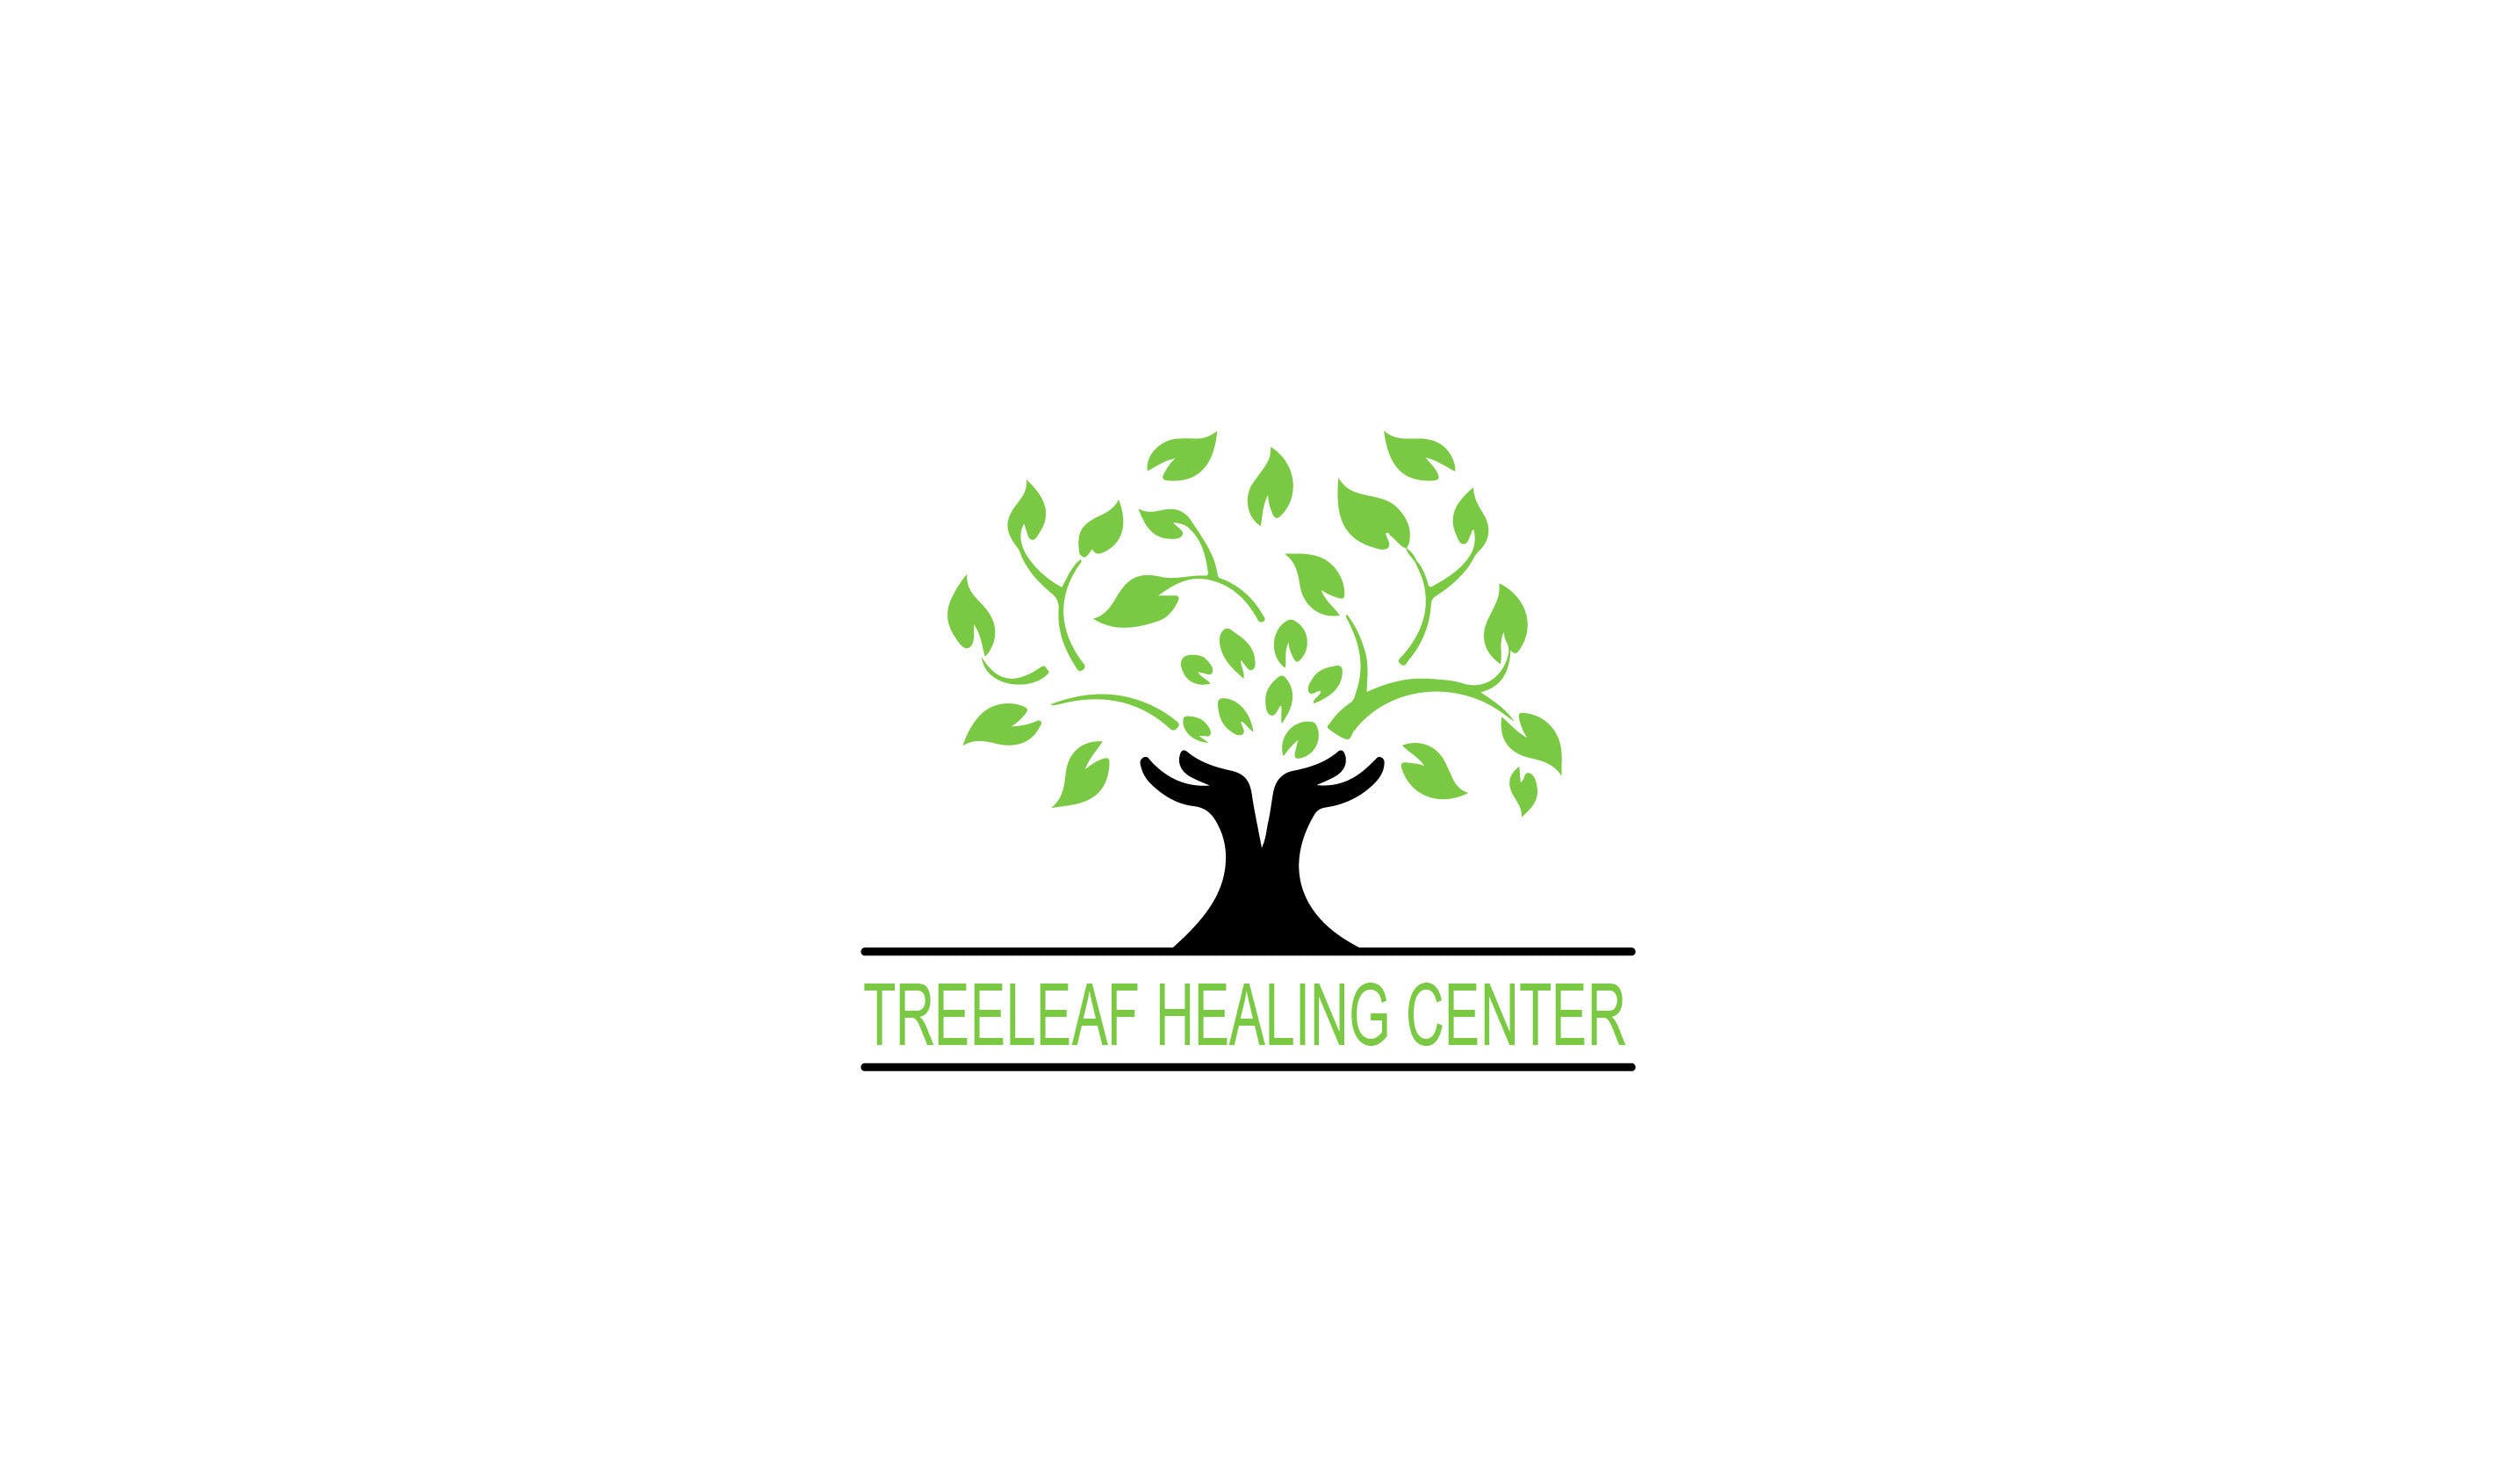 TreeLeaf Healing Center - Medical Marijuana Doctors - Cannabizme.com